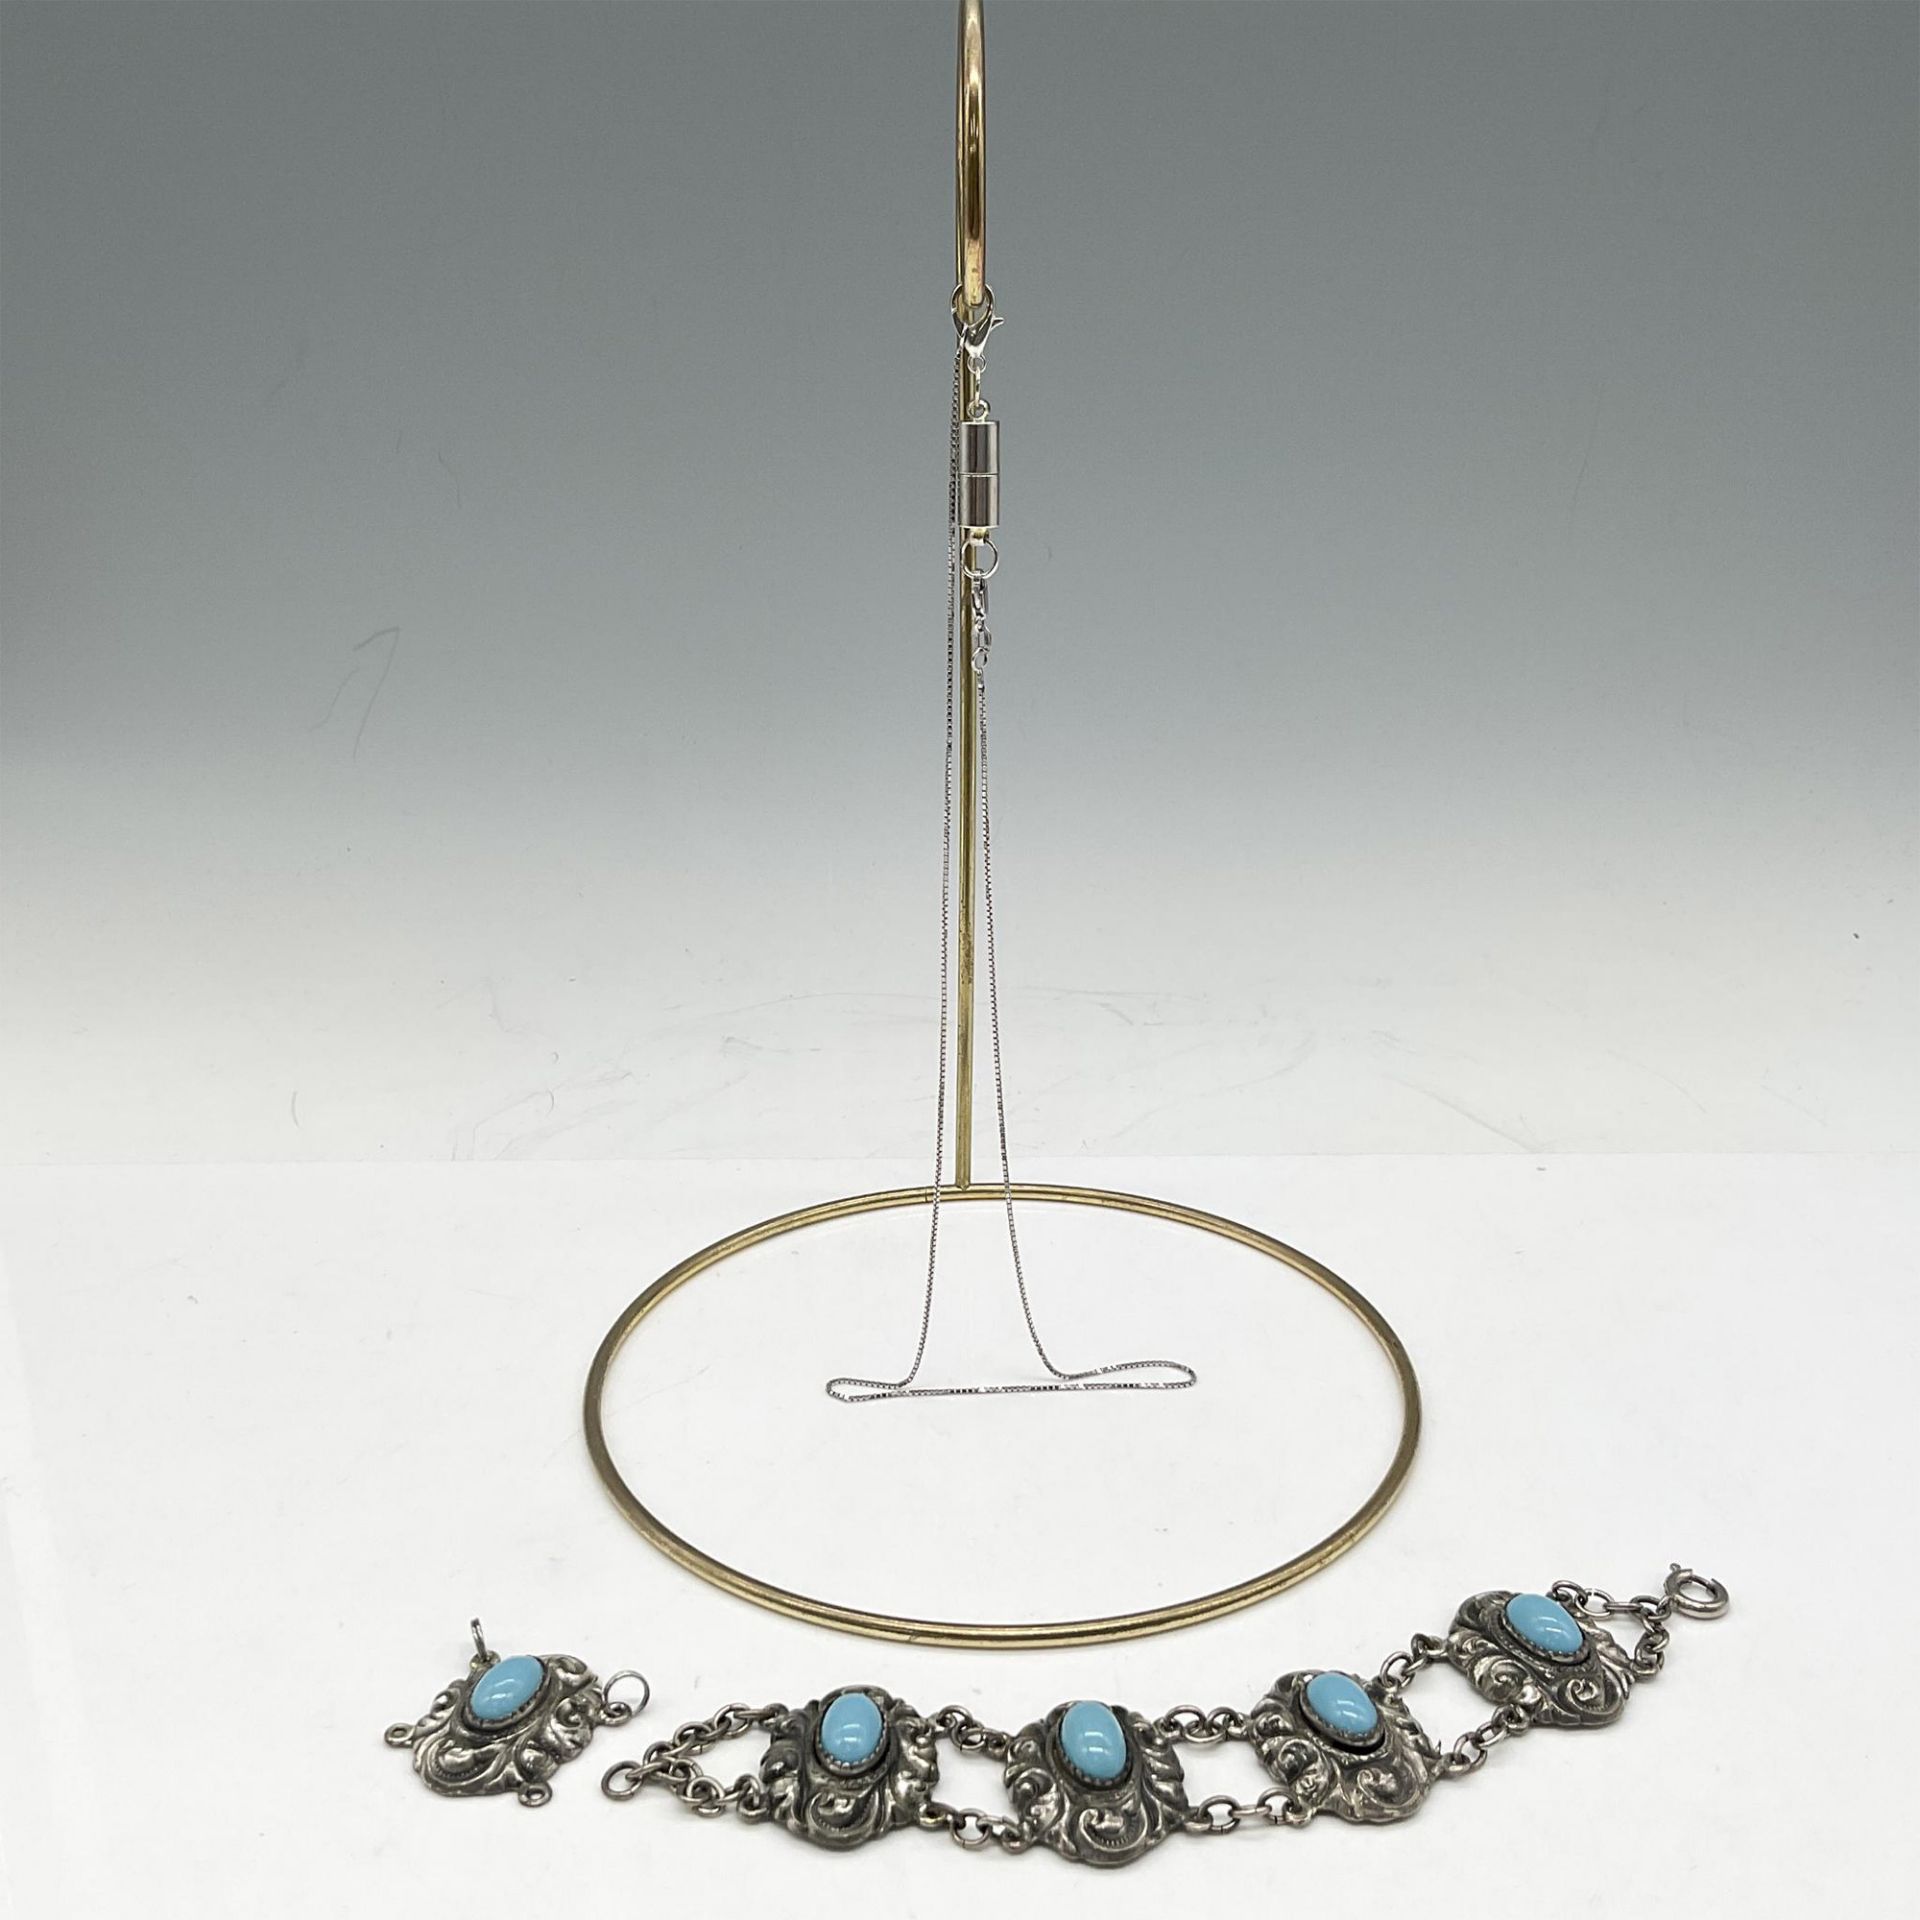 2pc Jewelry 14kt White Gold Chain + Bracelet with Blue Stone